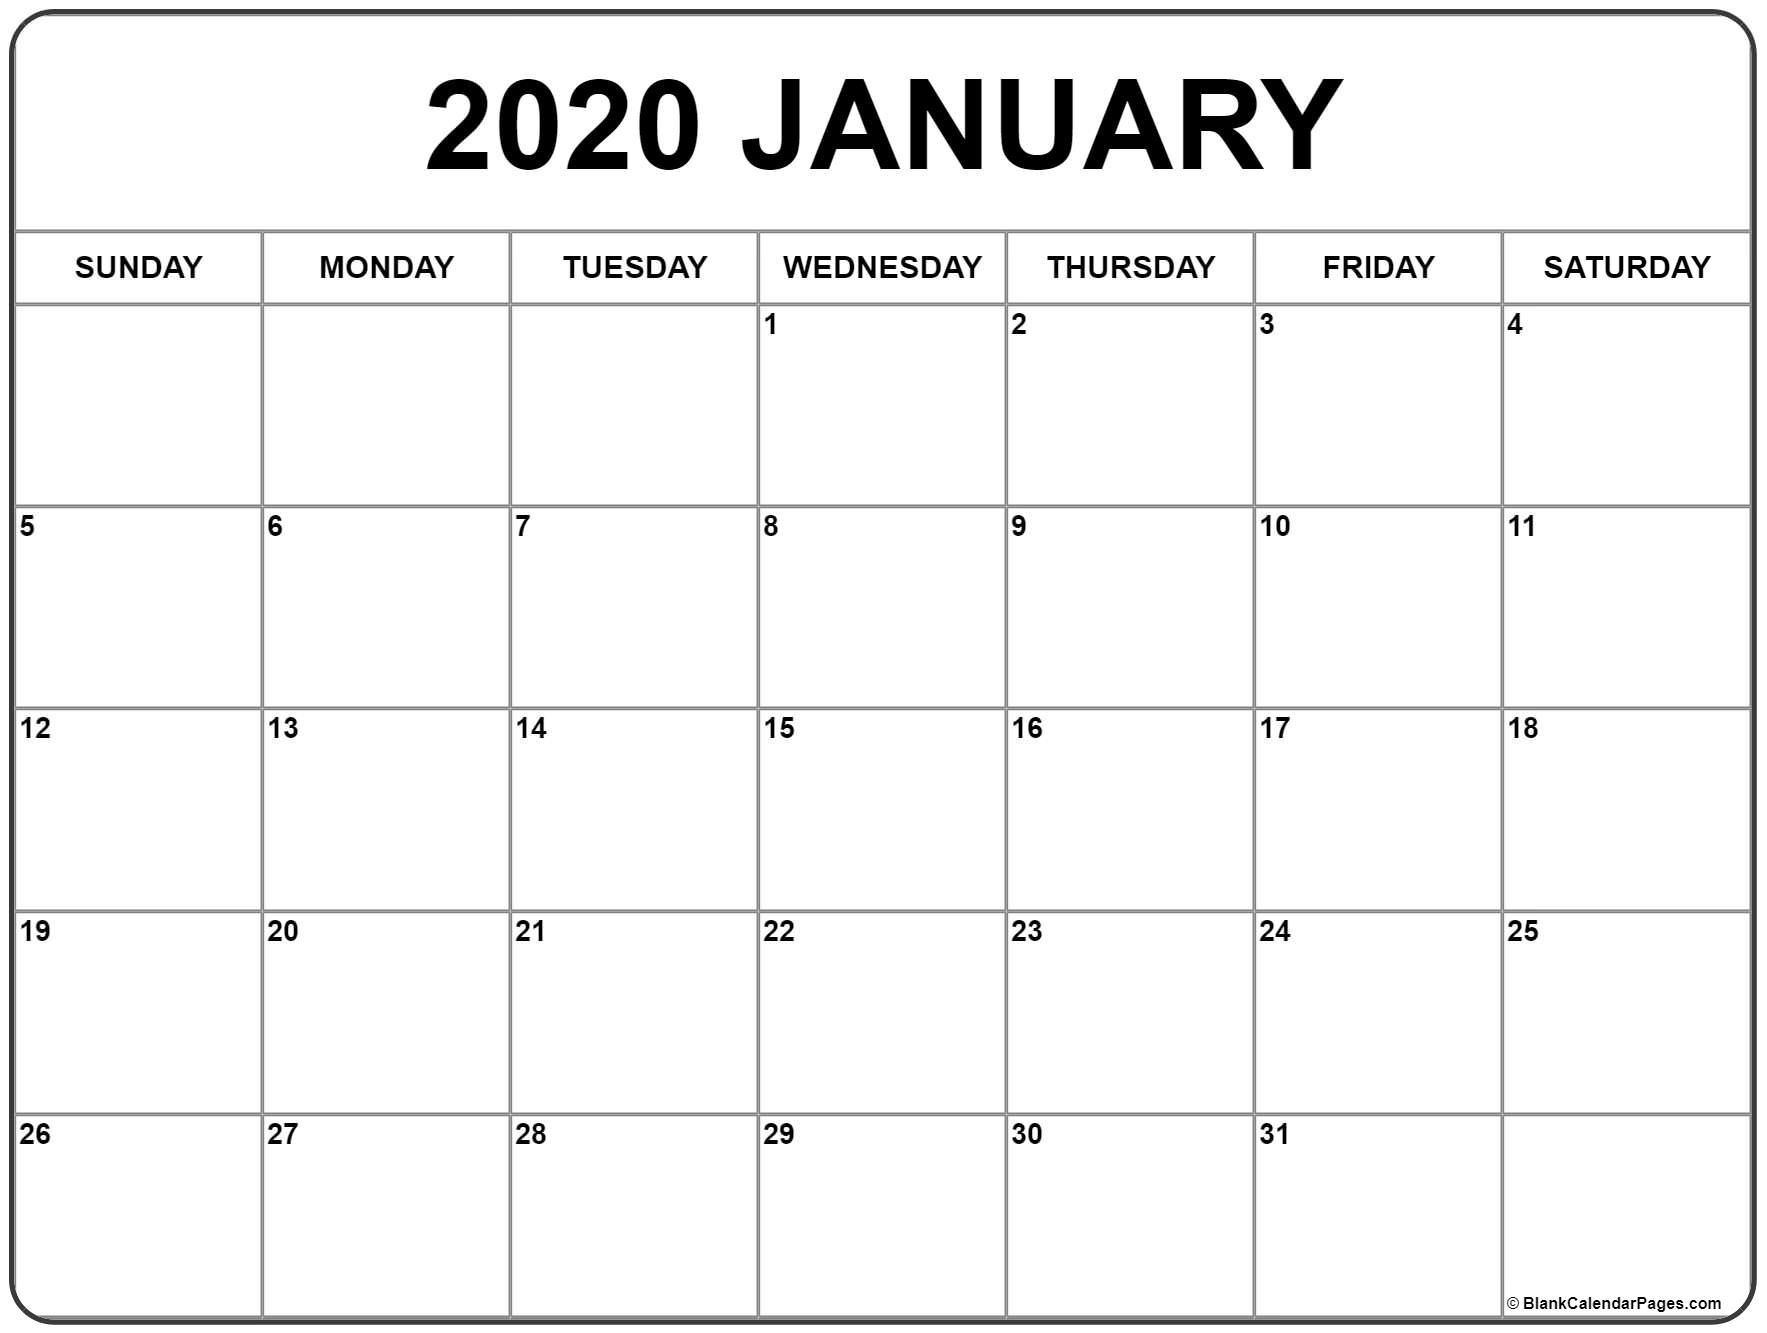 January 2020 Calendar | Free Printable Monthly Calendars-January 2020 Calendar Blank